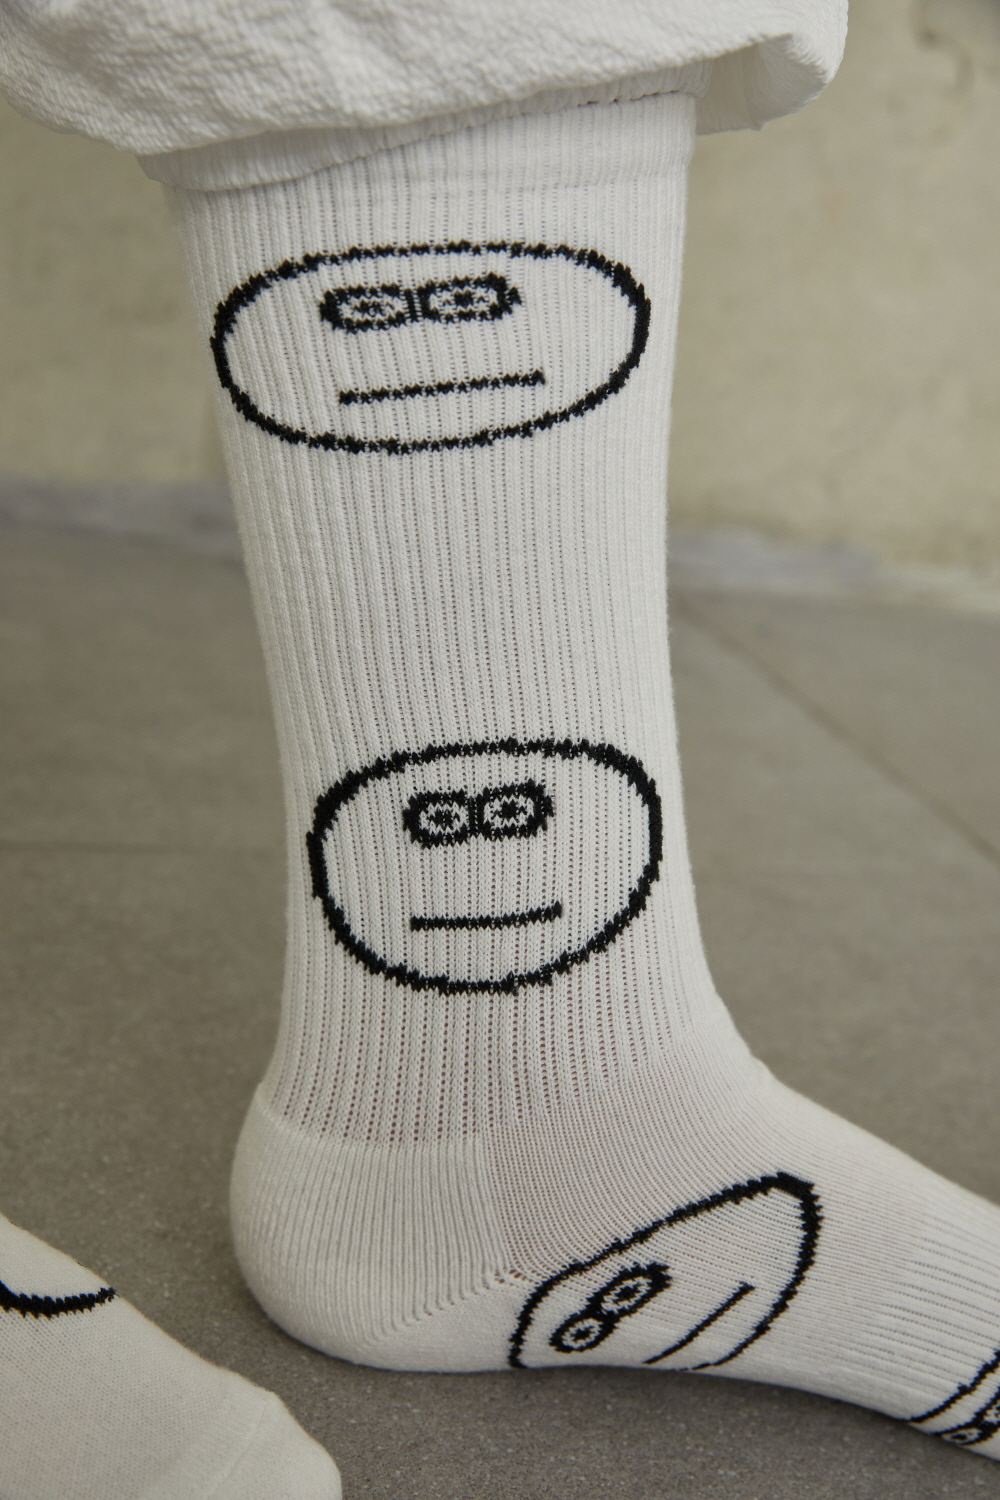 socks detail image-S1L100